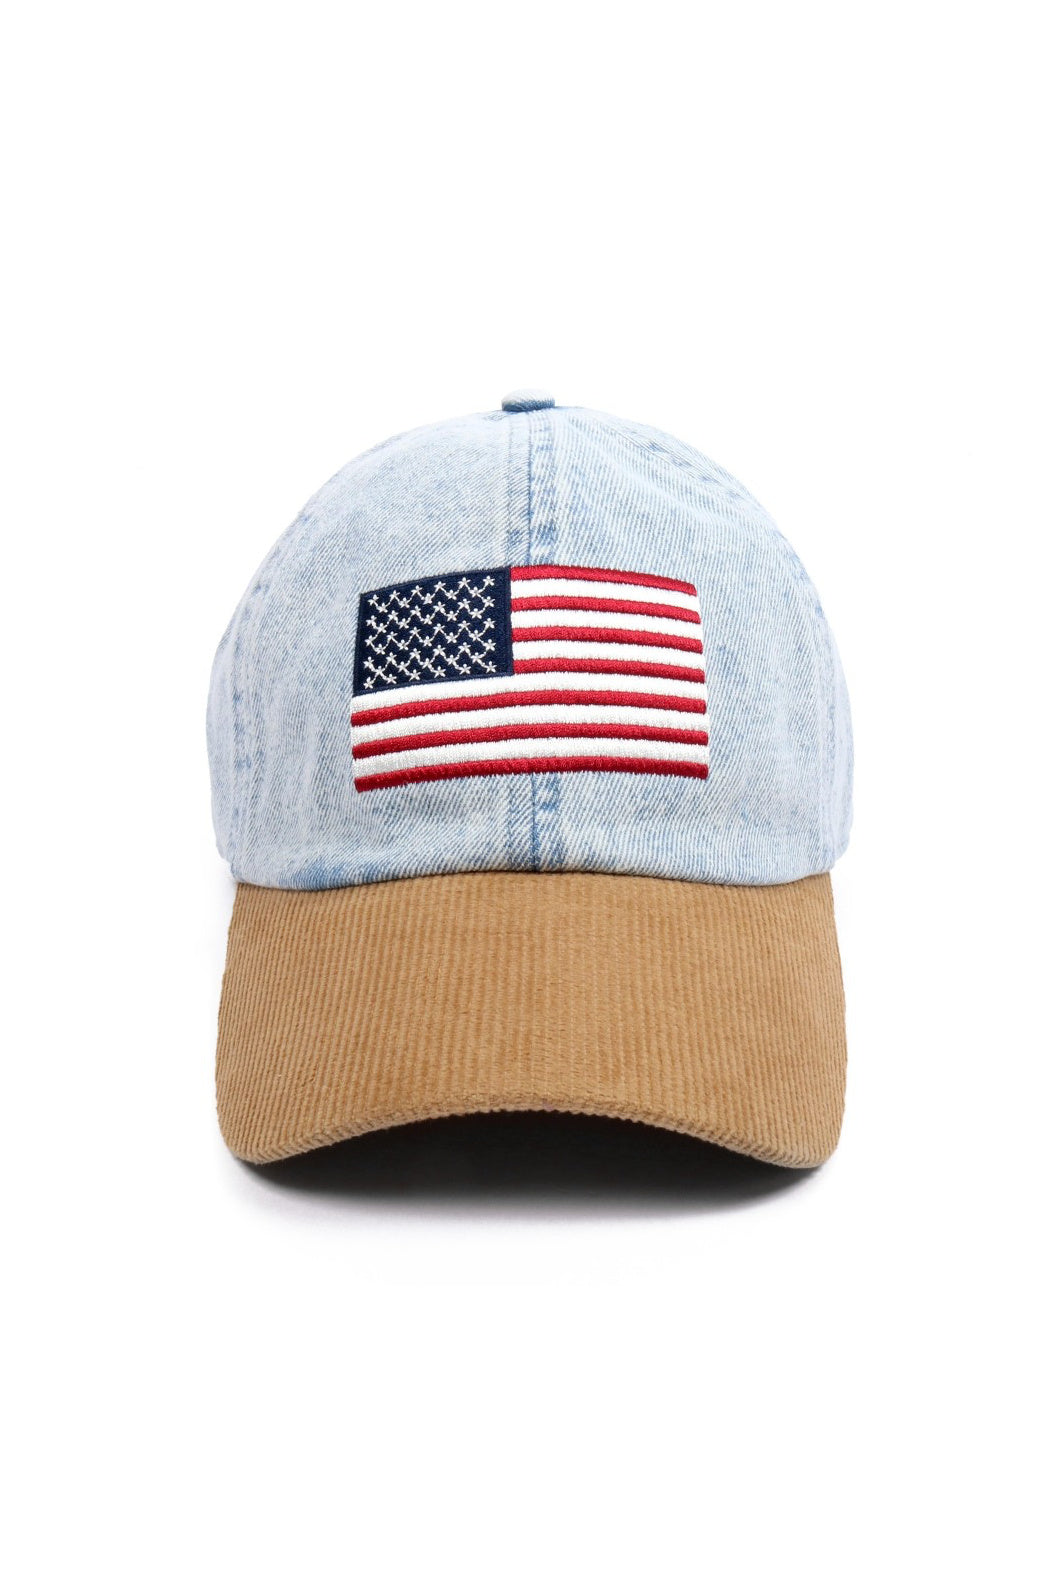 All American Cap